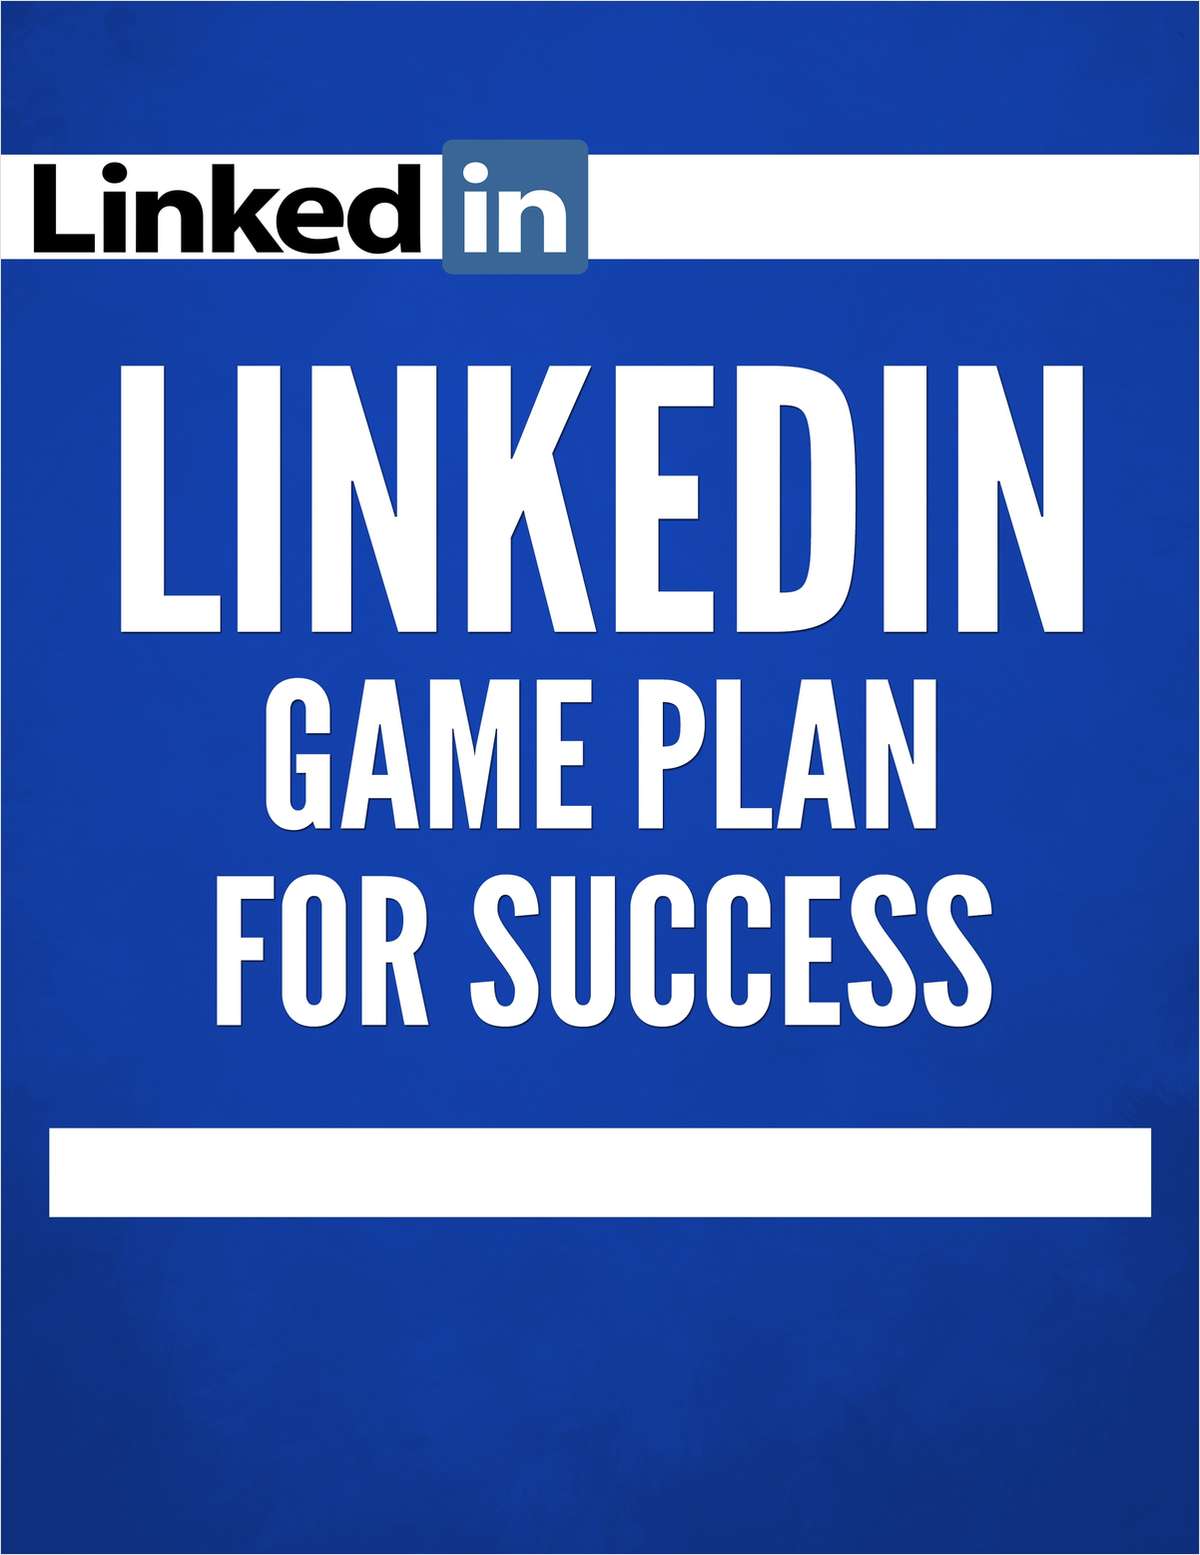 LinkedIn Game Plan for Success